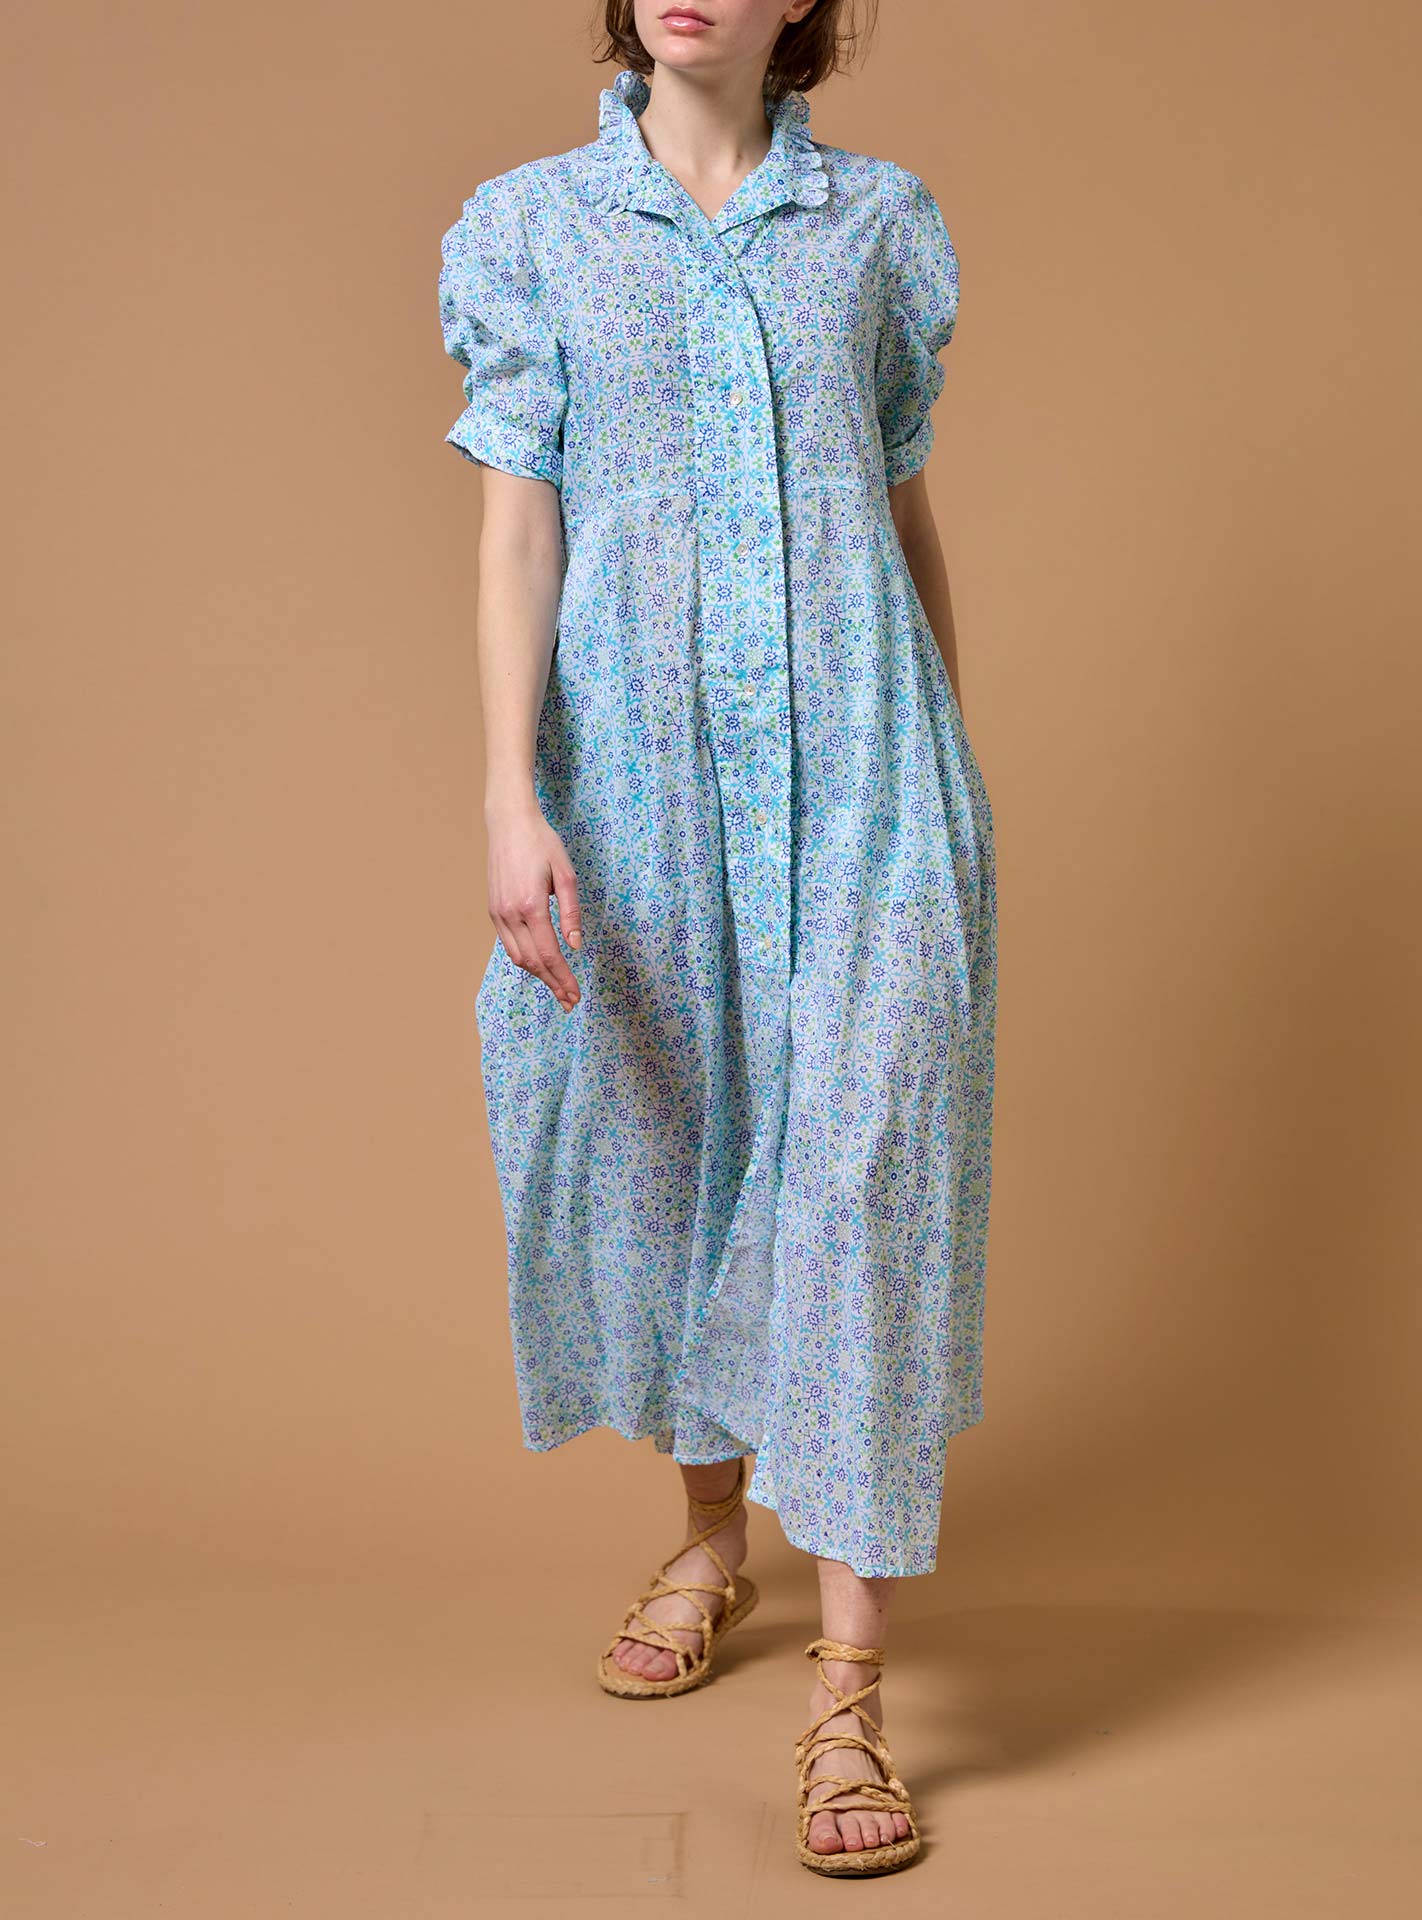 Venetia Mughal Blockprint Multico Blue Dress by Thierry Colson 